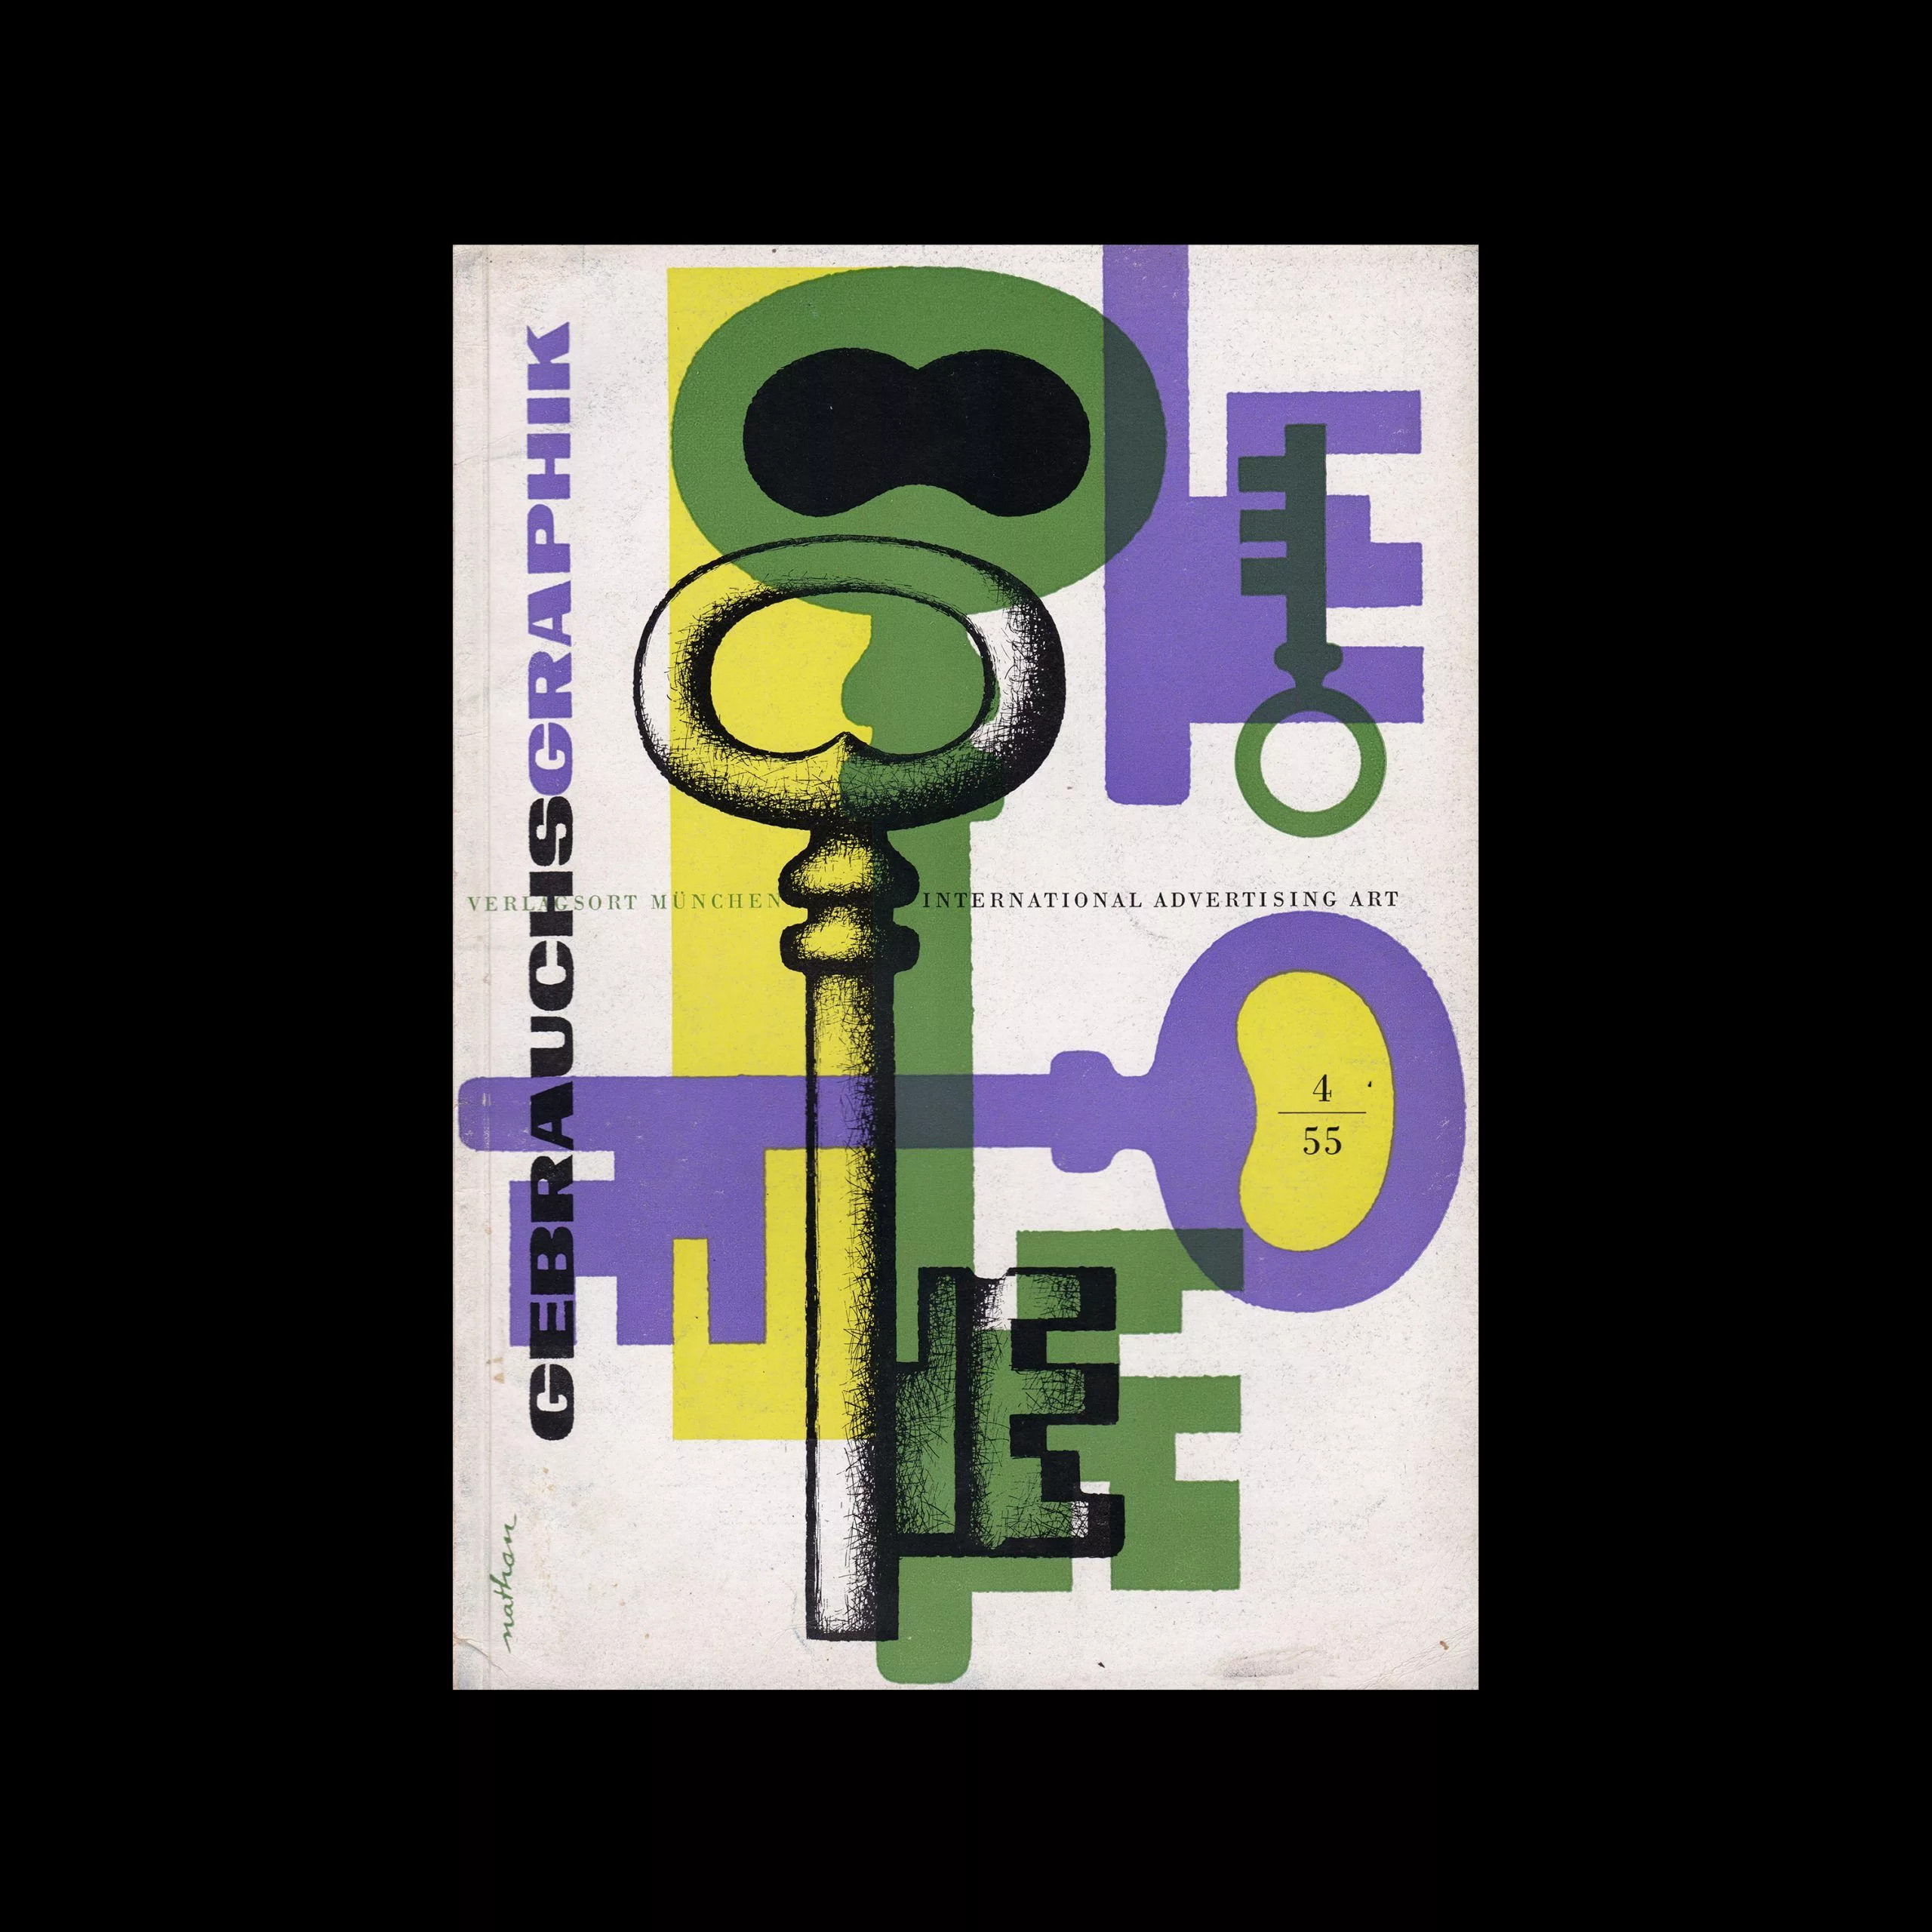 Gebrauchsgraphik, 4, 1955 cover design by Jacques Nathan-Garamond